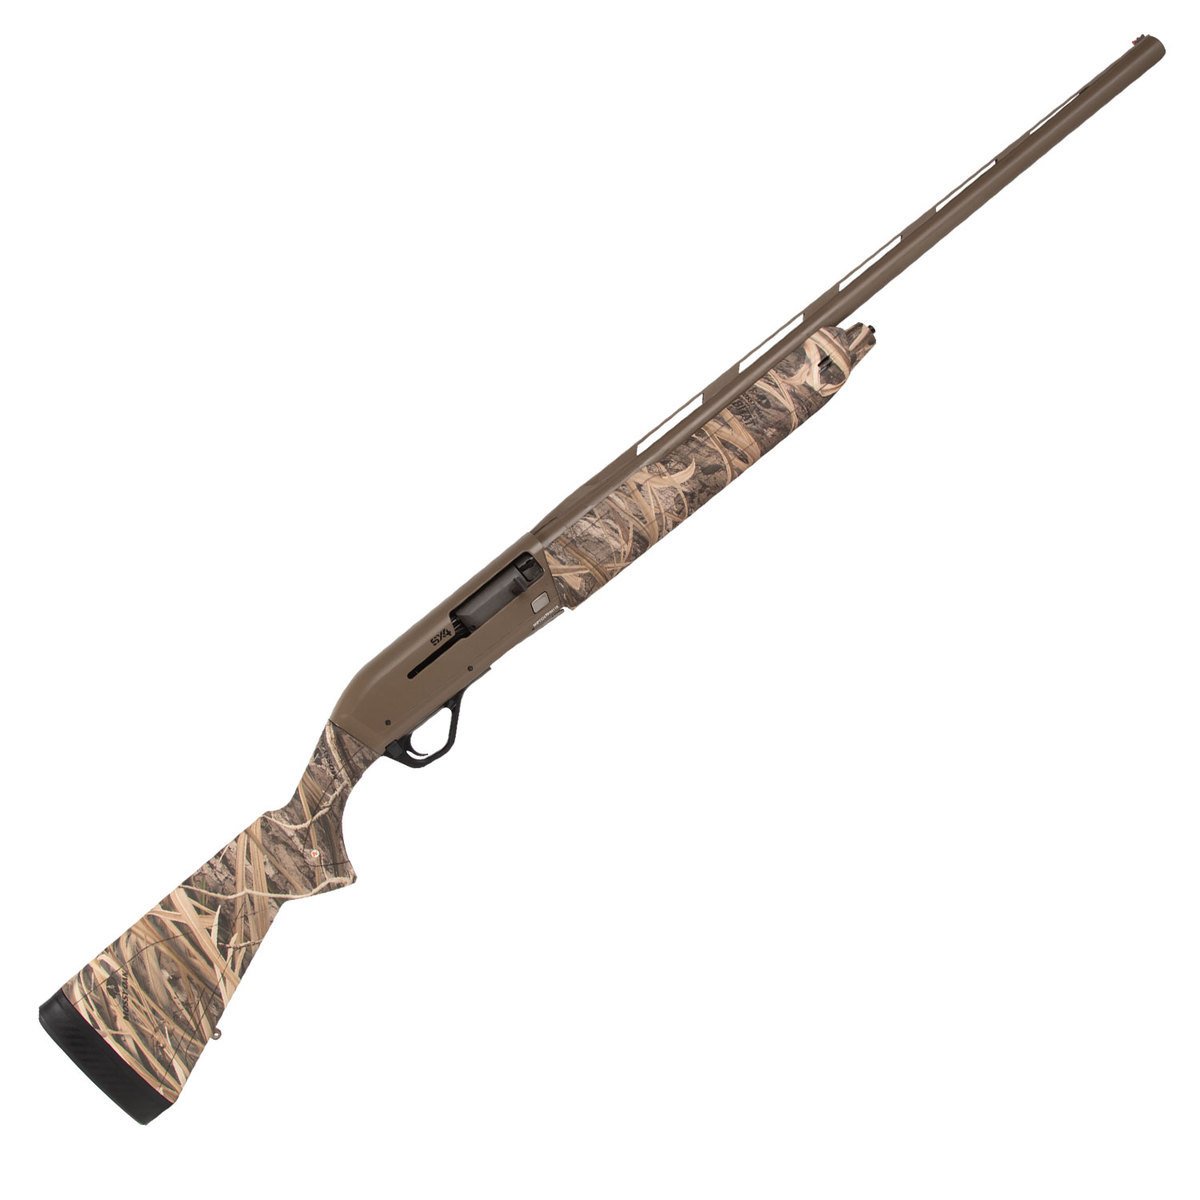 https://www.sportsmans.com/medias/winchester-sx4-hybrid-hunter-fdemossy-oak-shadow-grass-habitat-12-gauge-3-12in-semi-automatic-shotgun-28in-1692781-1.jpg?context=bWFzdGVyfGltYWdlc3w3NzMxNHxpbWFnZS9qcGVnfGFXMWhaMlZ6TDJoaE1pOW9NR1F2T1RnNU5UQTBPREE0TlRVek5DNXFjR2N8YWI5YzgzODg5ZTU2ODhiYmIyYzFhZGUxYTk3MDAyNzUxODZmNDQyZjllYTQ2YTRlMjYzOWEzNjQ2MjRkOTdhNg